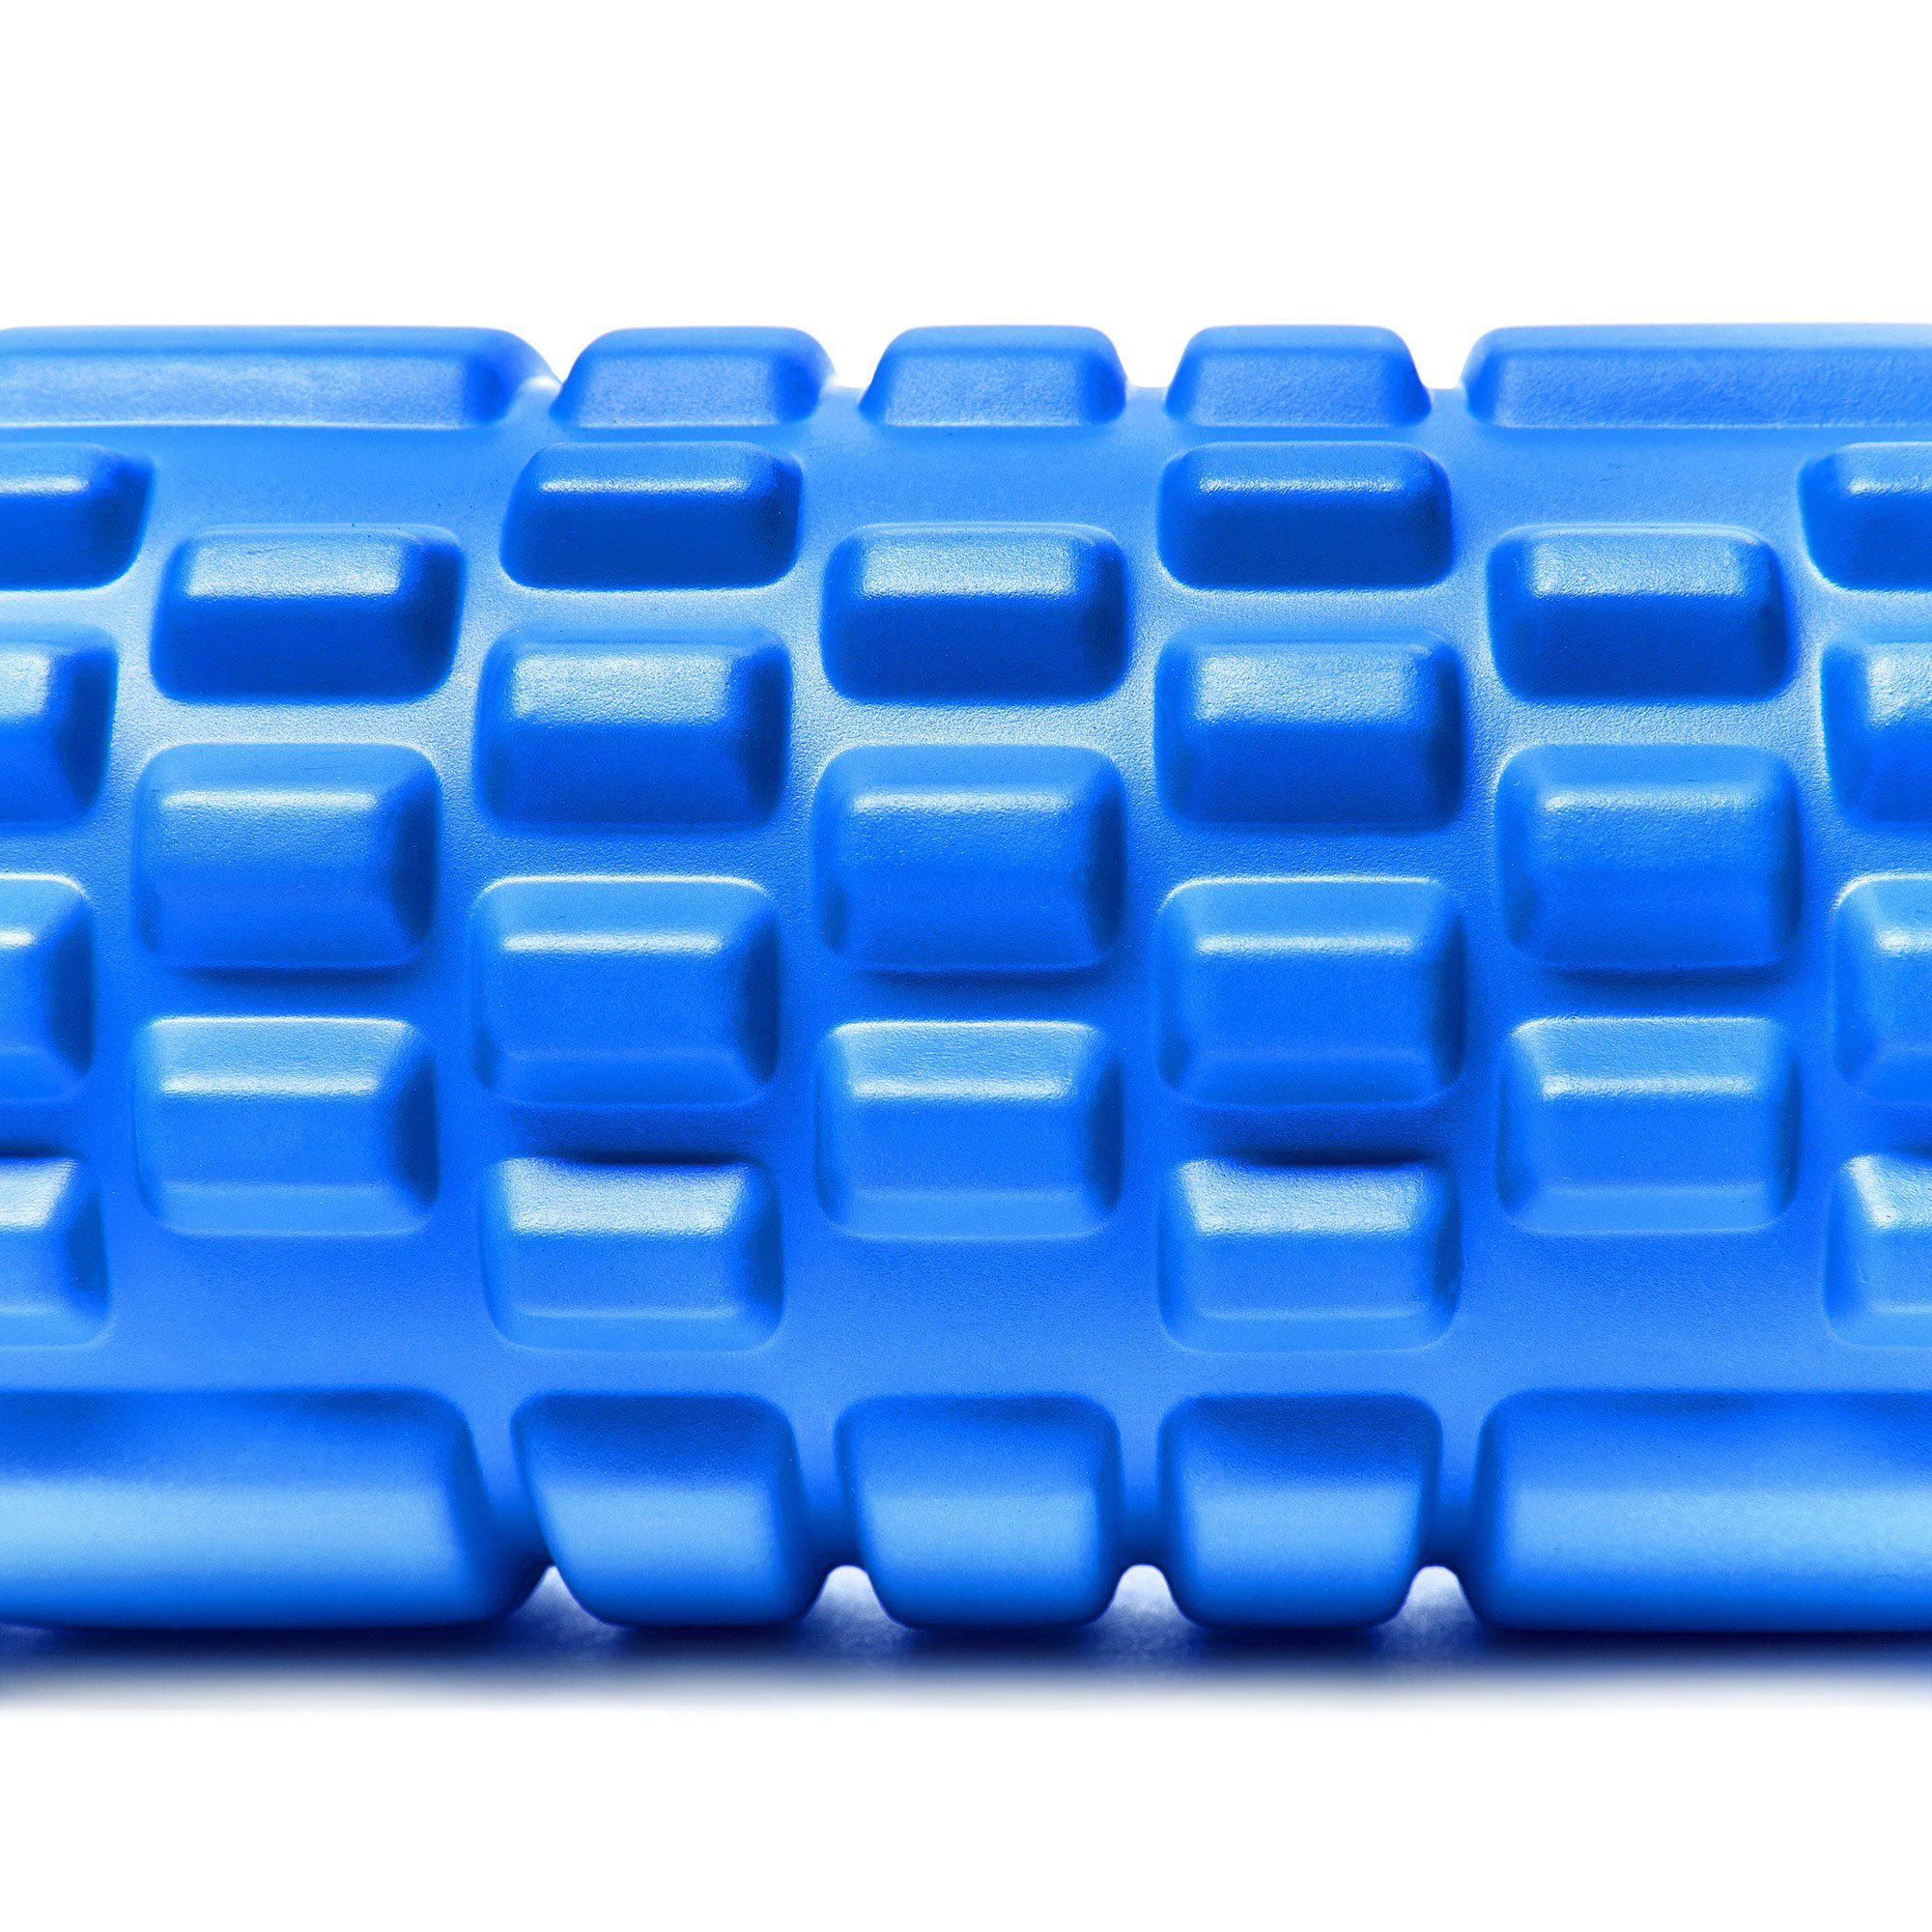 Anasuya Fitnessrolle blau Faszienrolle Massagerolle inkl. #DoYourFitness 34x14cm Trainingsplan,